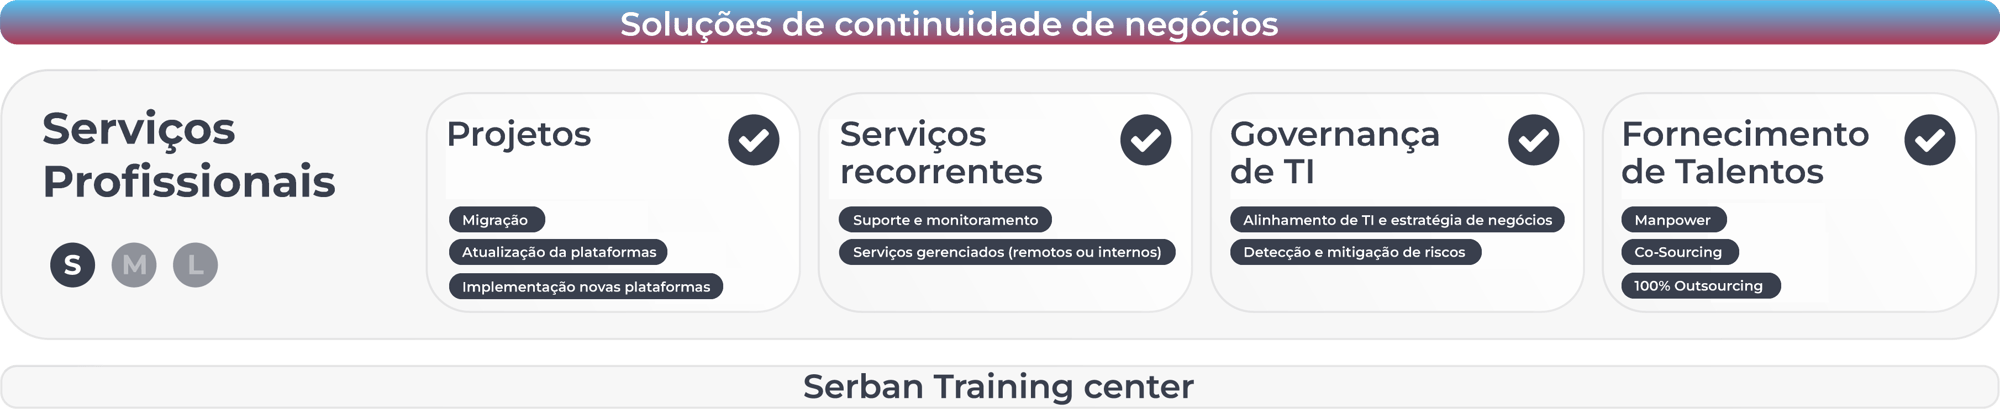 servicios-serban-2-img-pt2